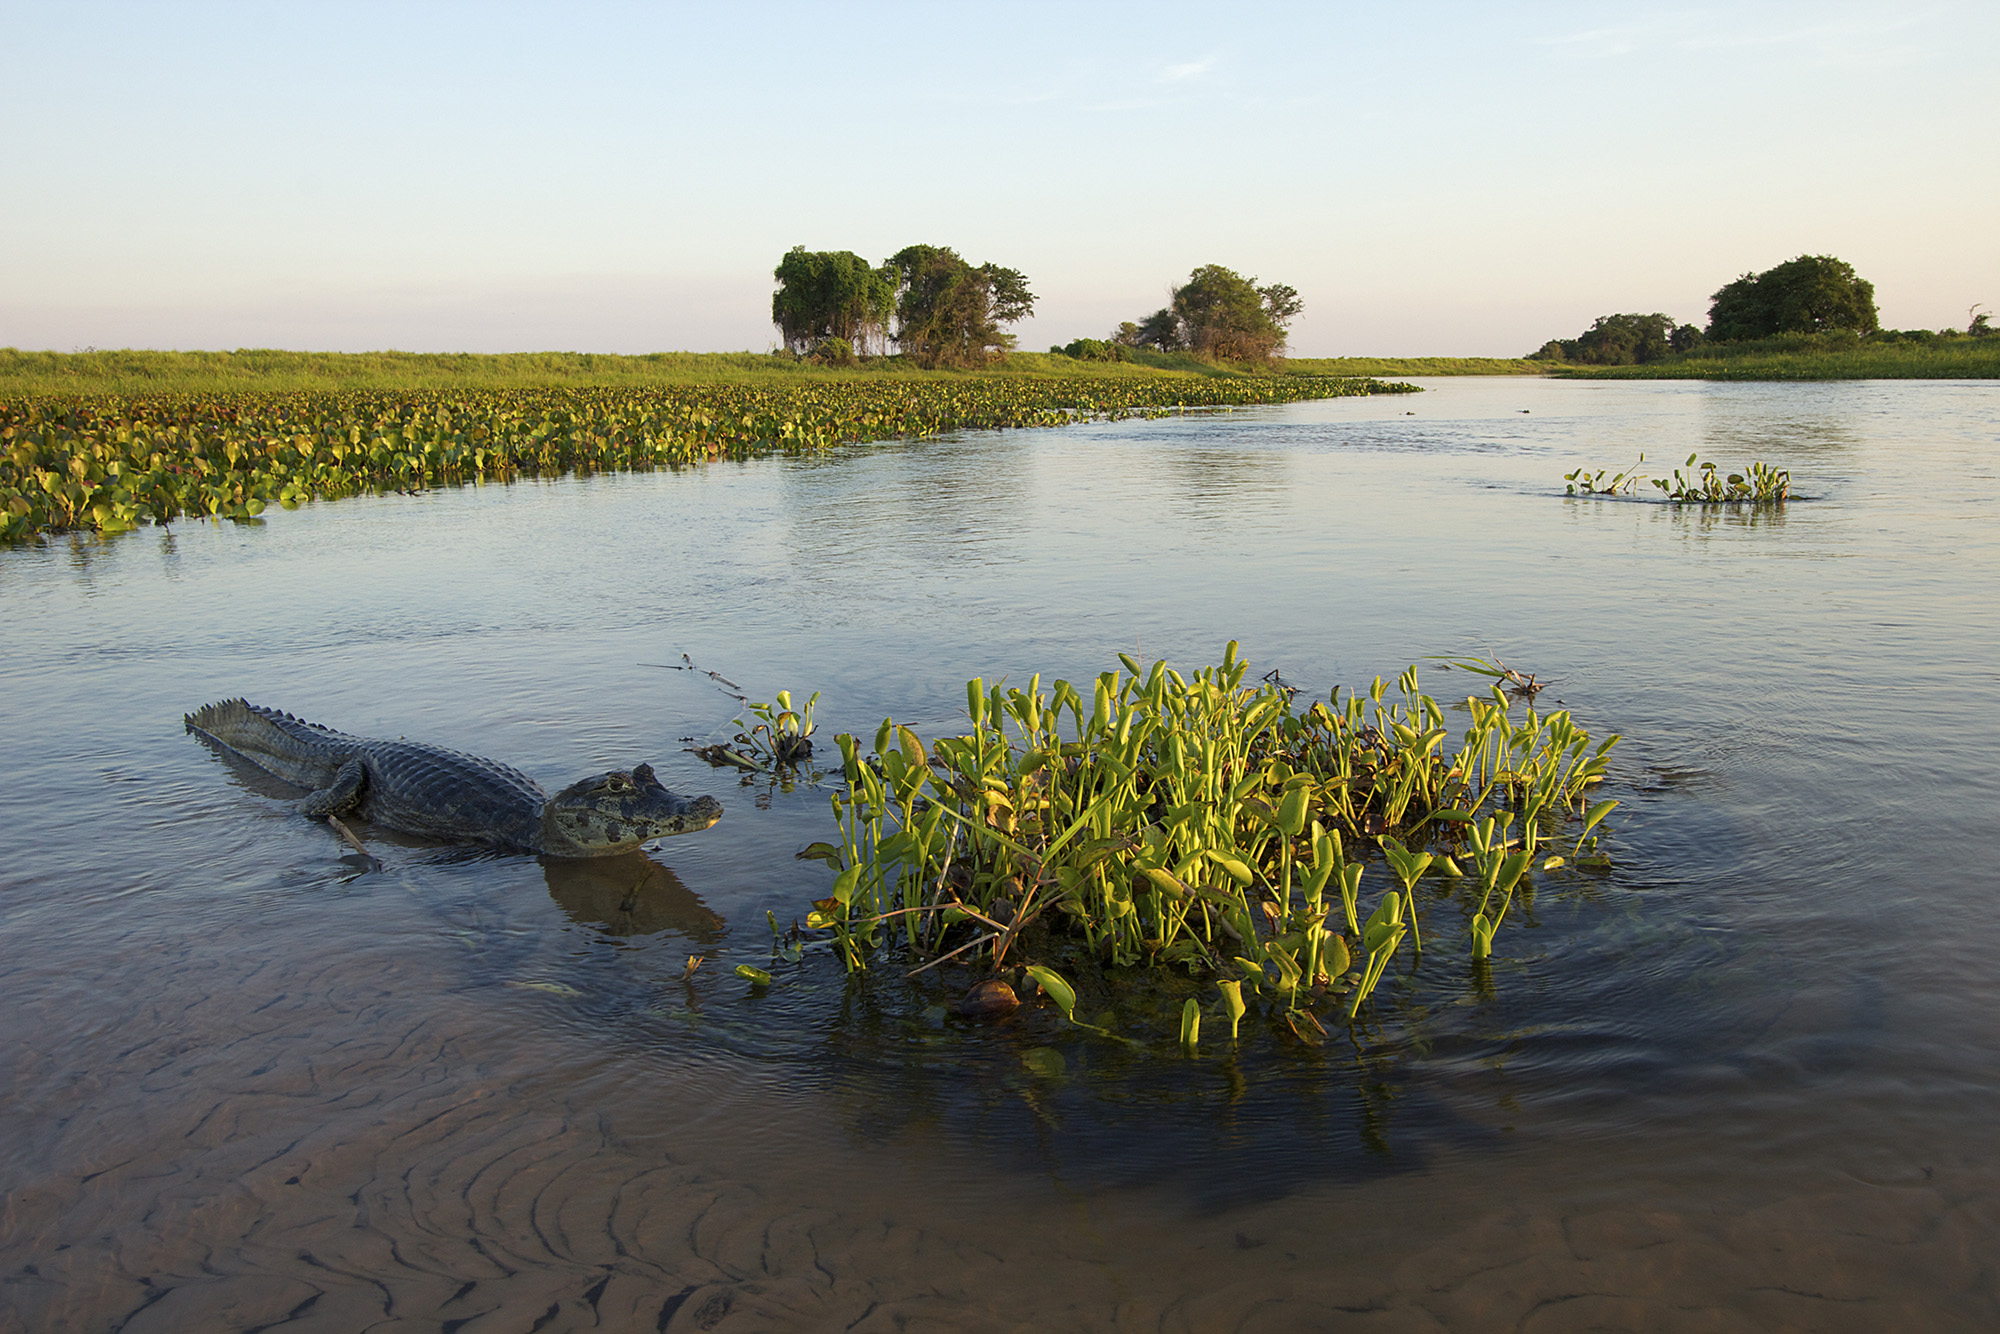 The world’s largest wetland and a Yacare caiman, Pantanal, Brazil